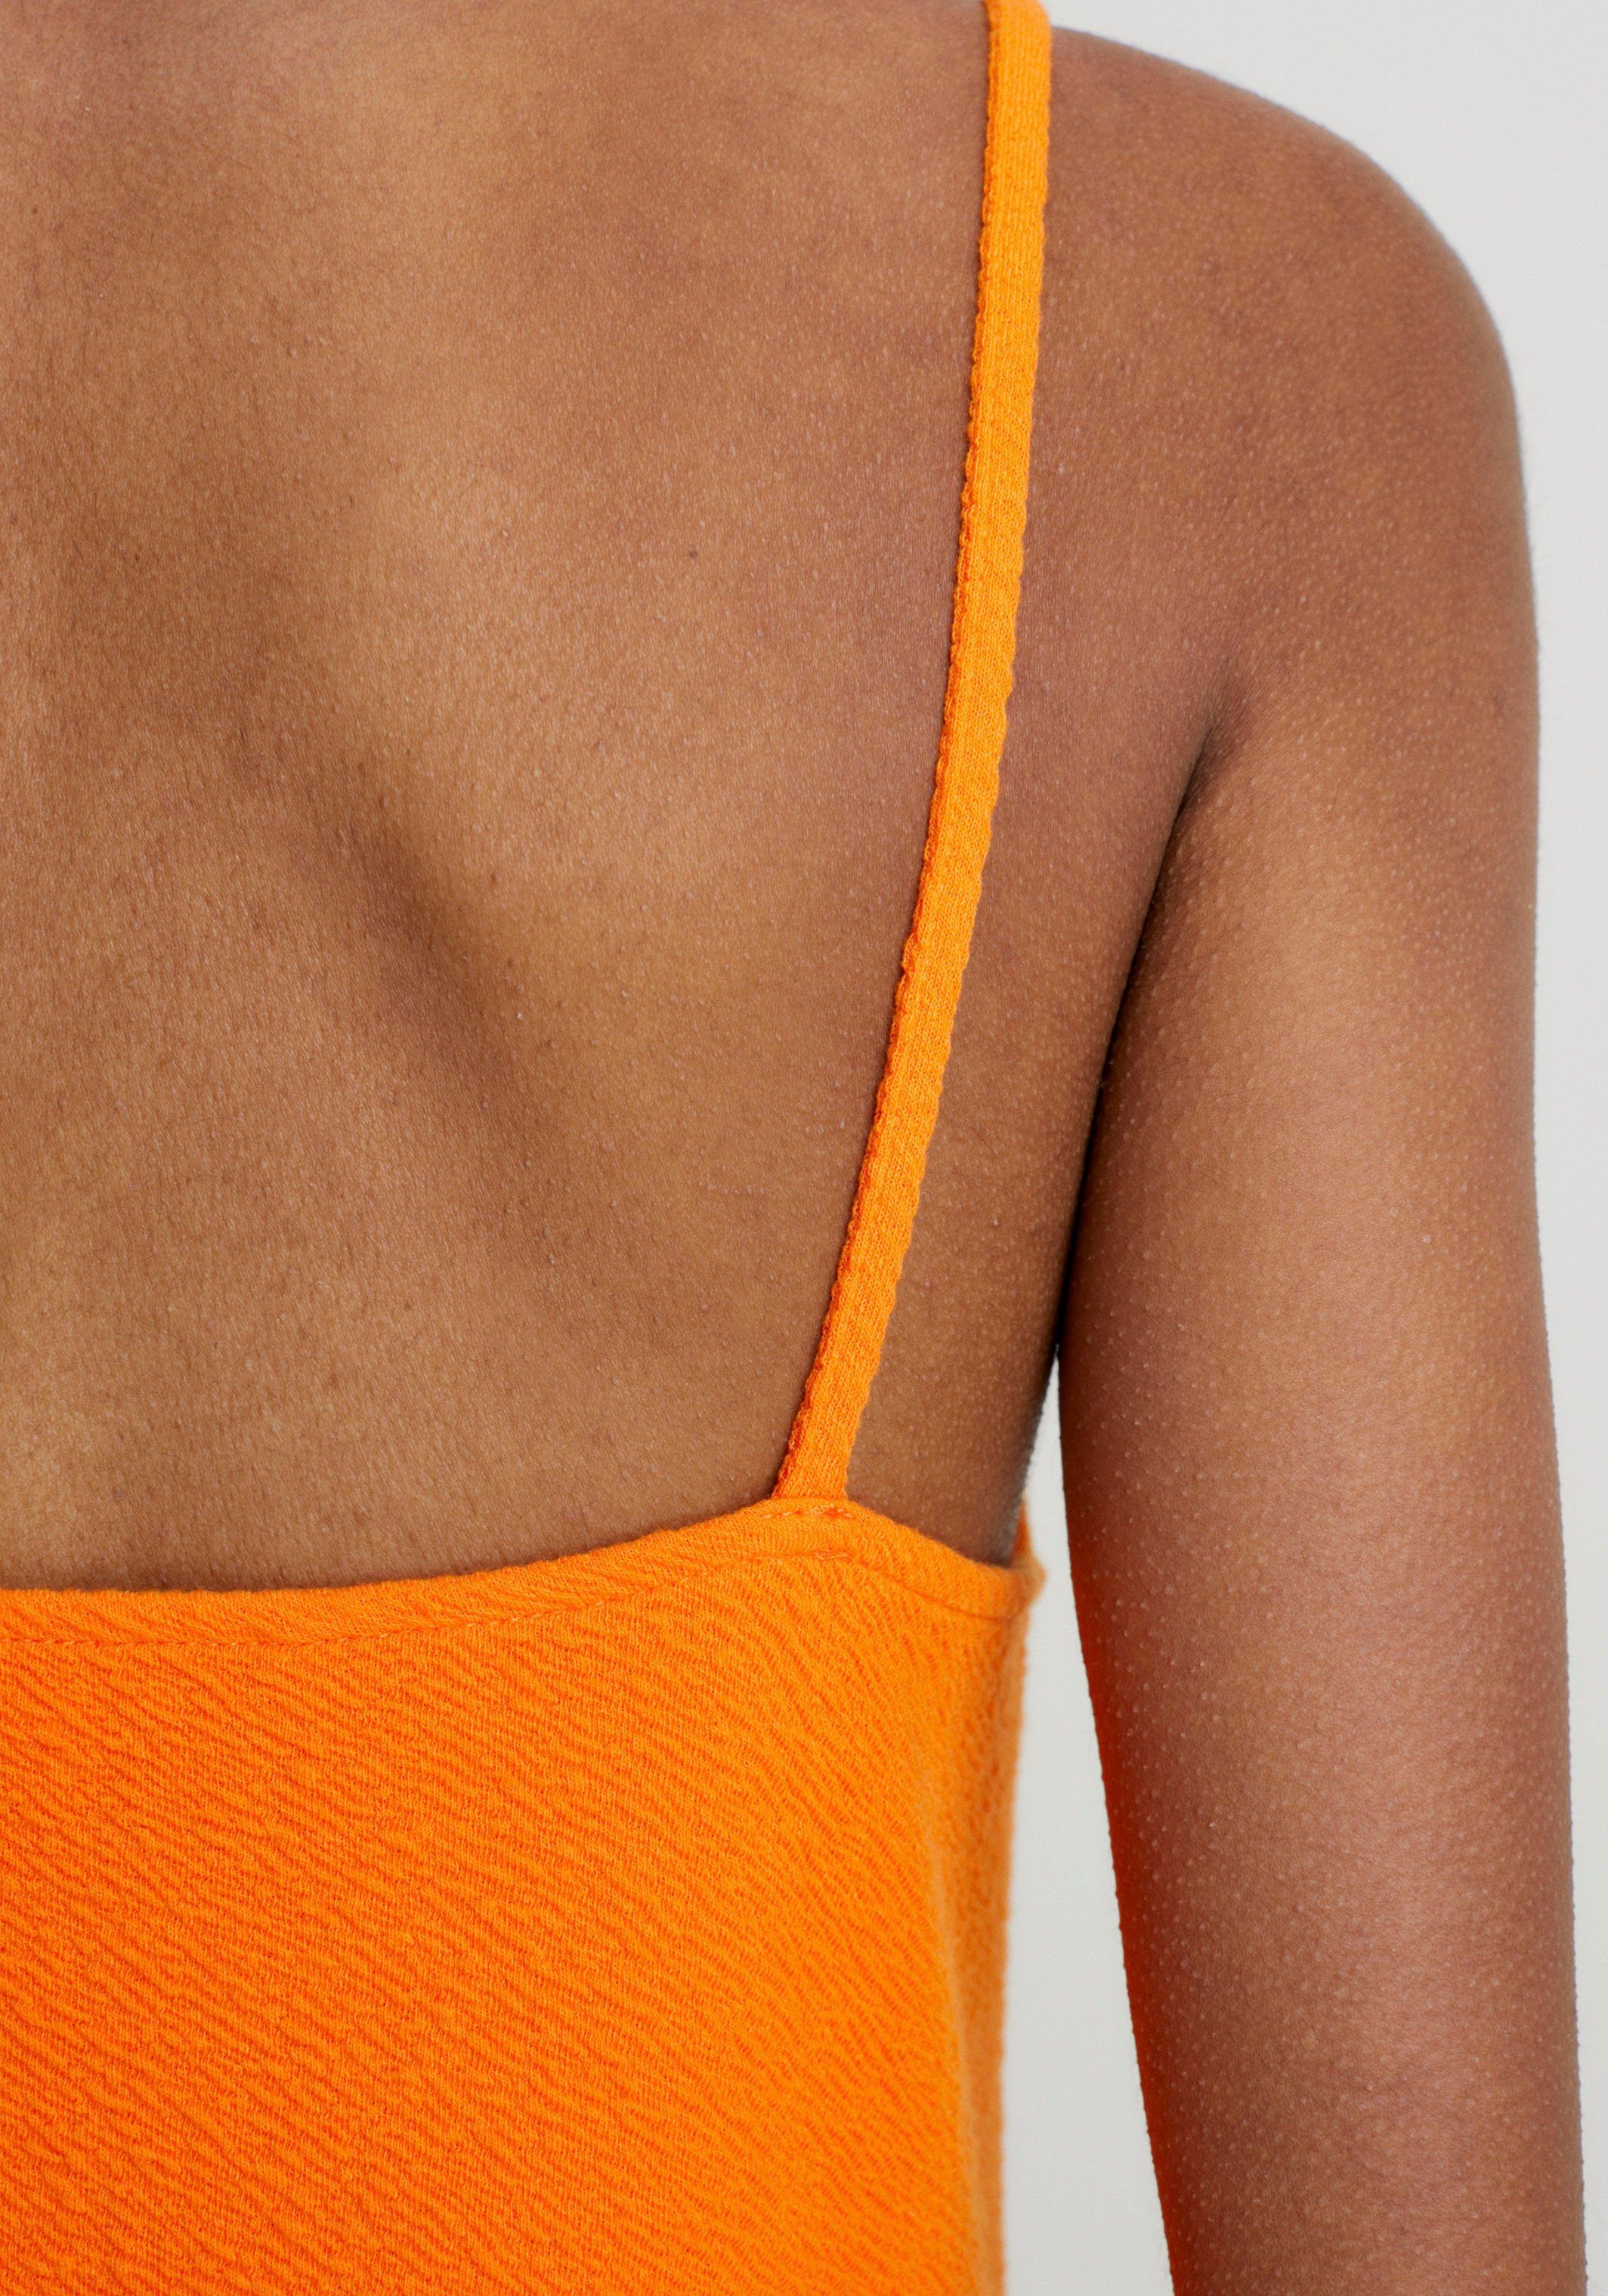 Calvin Klein Jeans Spaghettikleid aus strukturiertem RIB Material orange SLUB STRAPPY